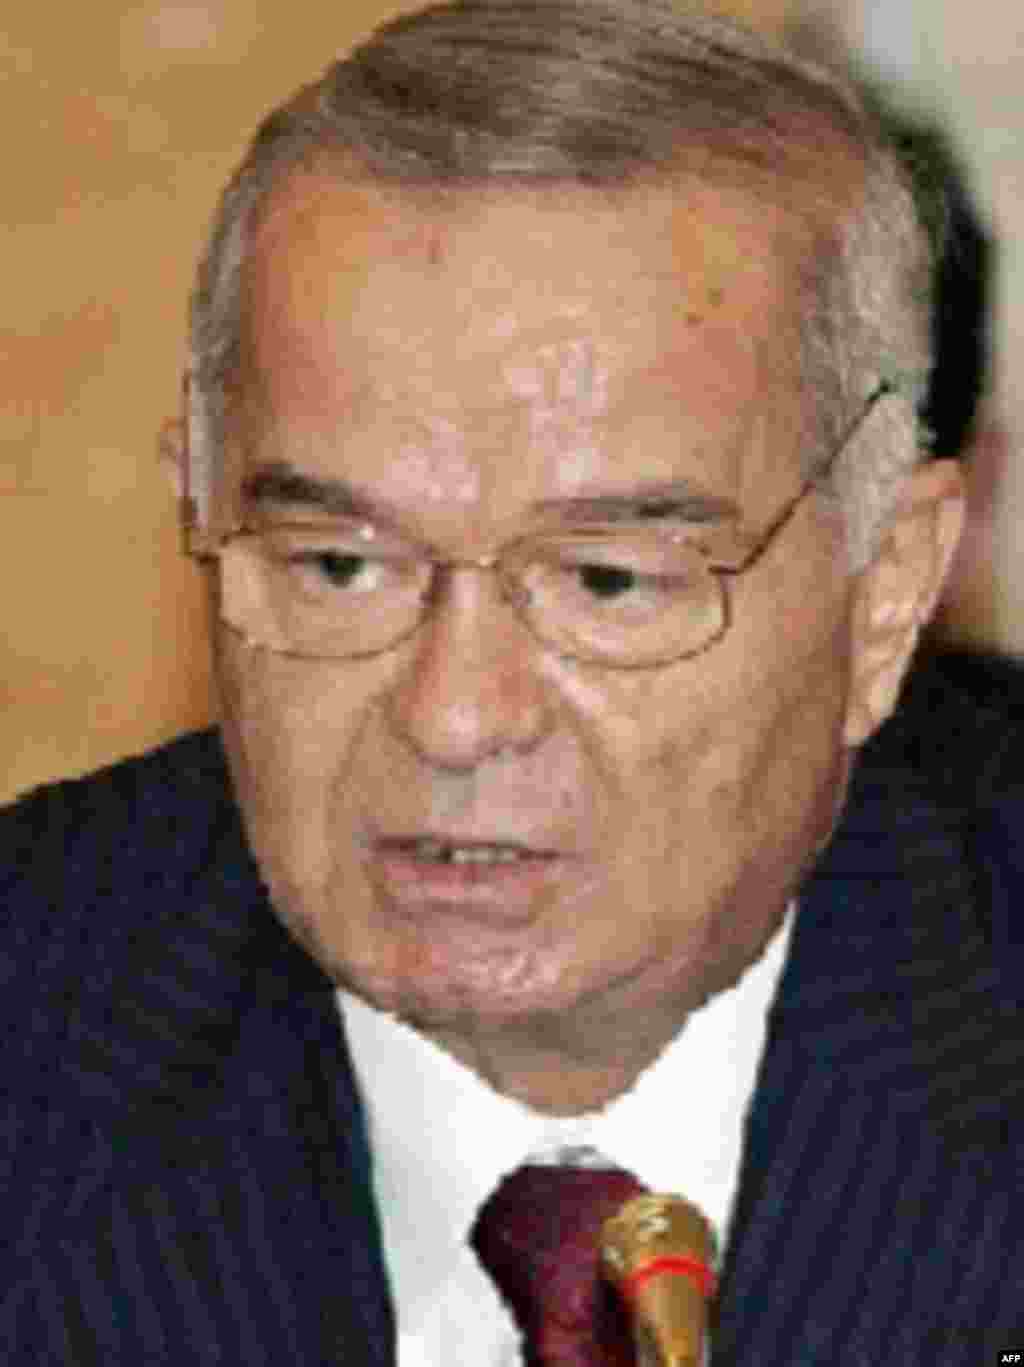 Russia/Uzbekistan -- Uzbek President Islam Karimov at the EuroAsian Economic Cooperation summit near St. Petersburg, 25jan2006.